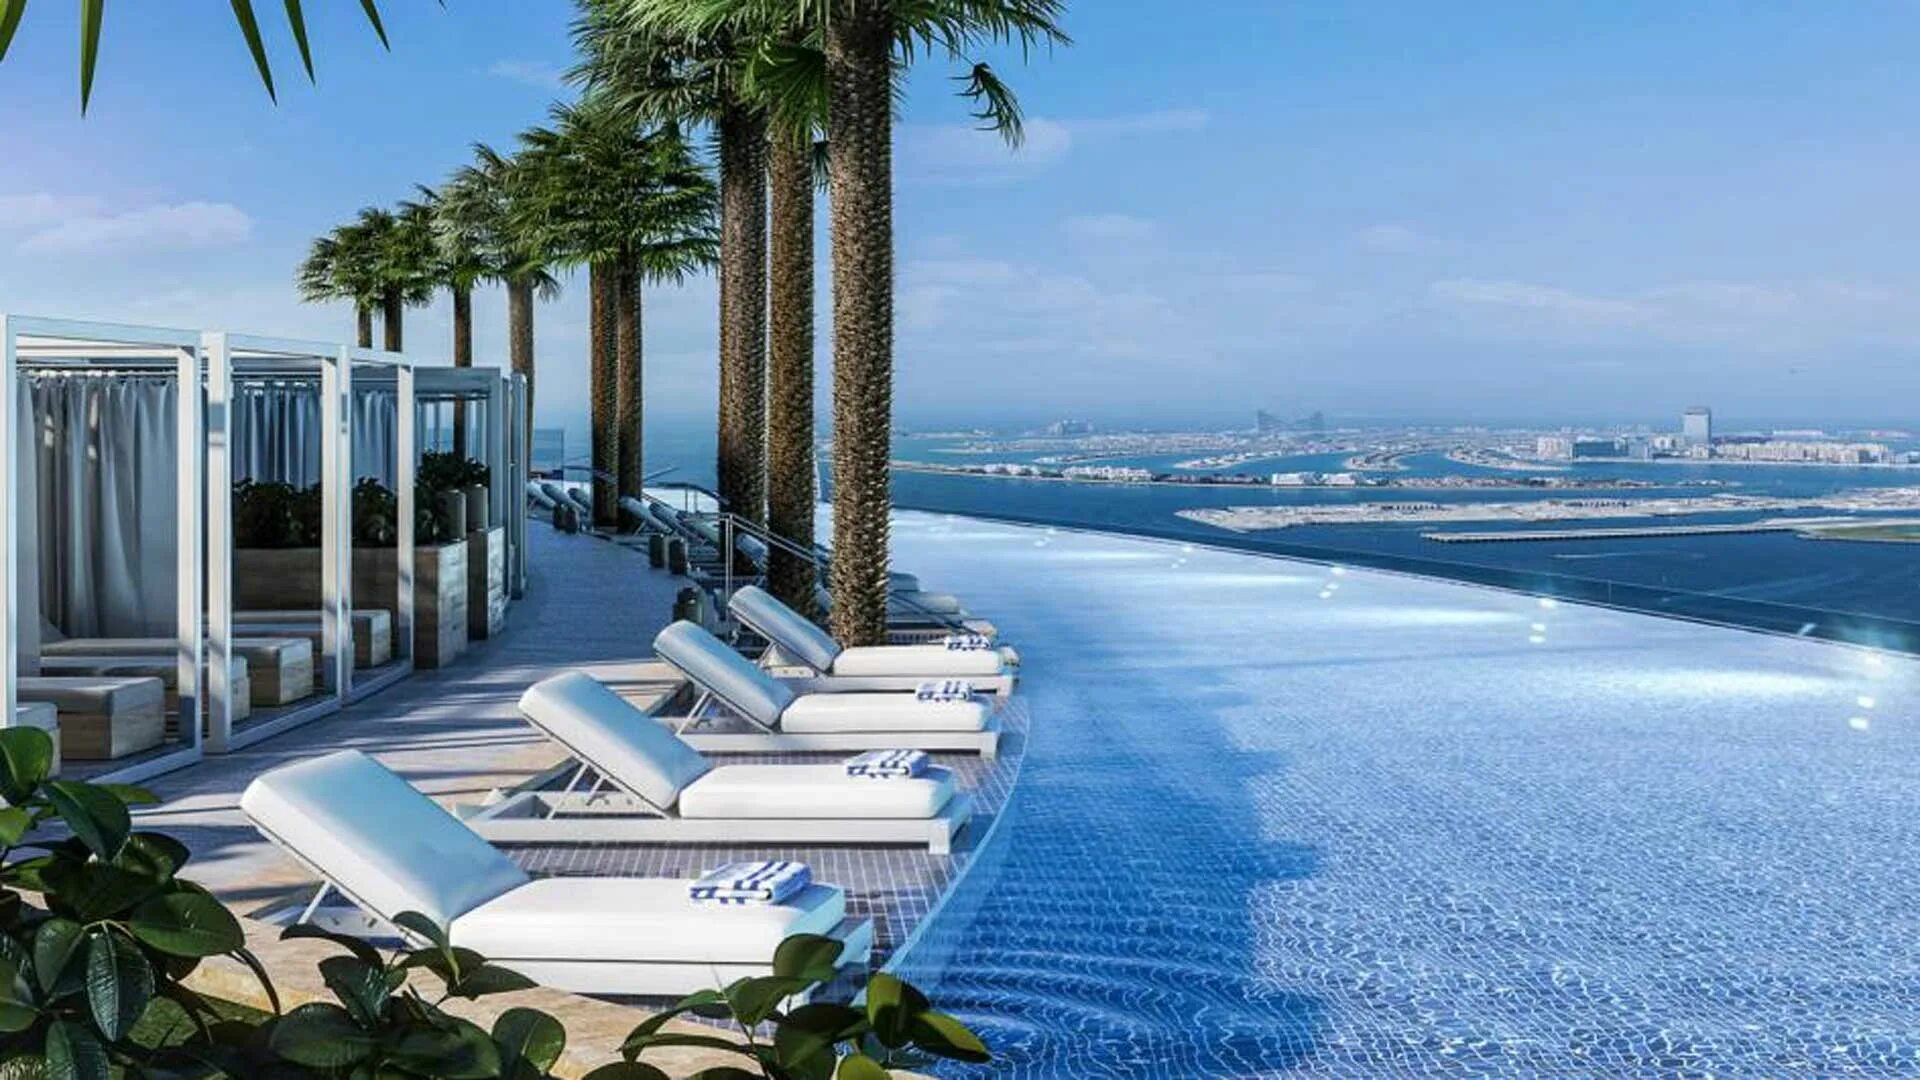 Address Beach Resort Дубай. Address Beach Resort 5 Дубай. Jumeirah Beach Residence Дубай. Address Beach Resort Дубай бассейн. Pool addresses